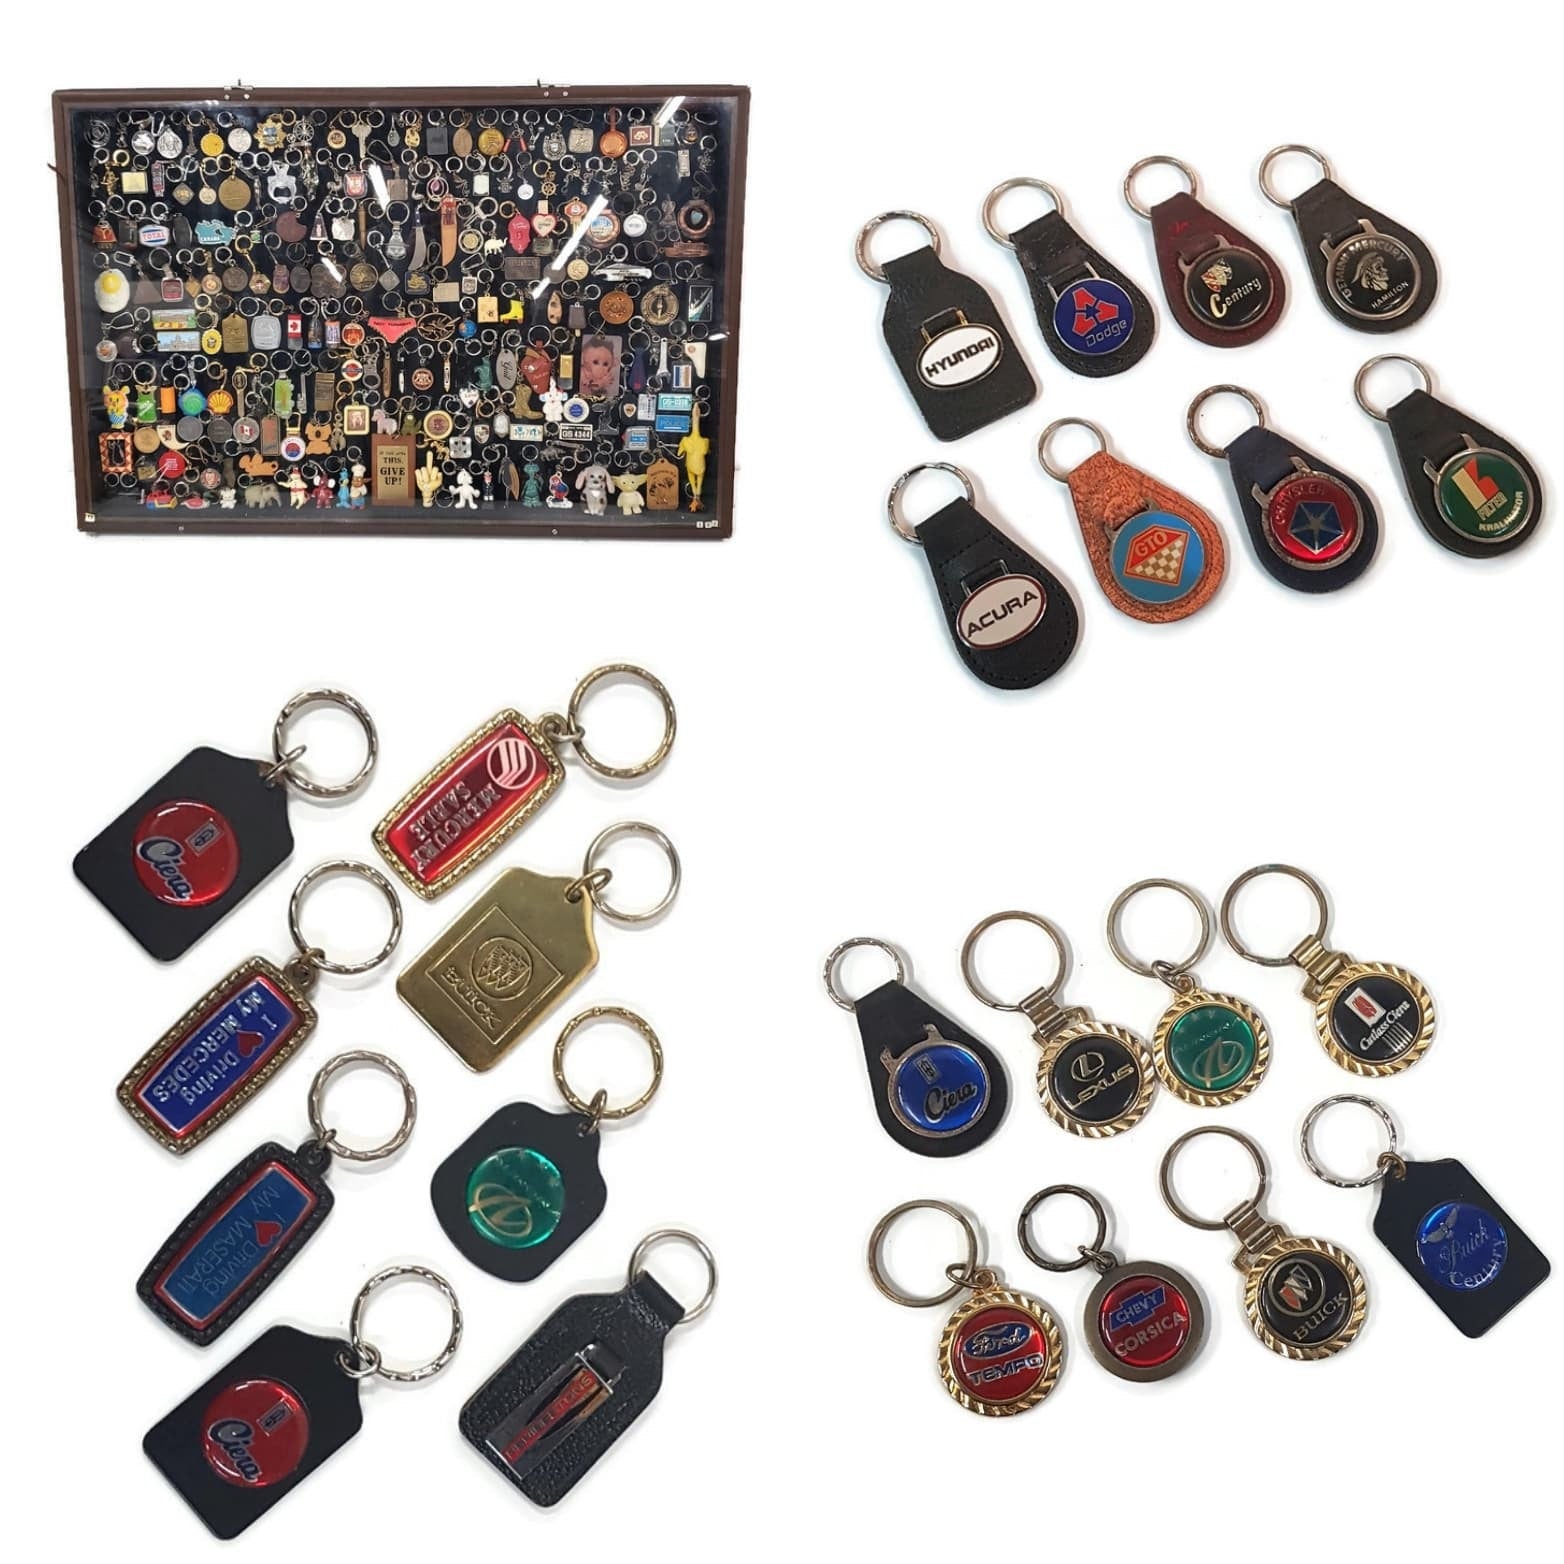 honda  key chain keychain key fob keytag vintage automotove keychain gift collectible